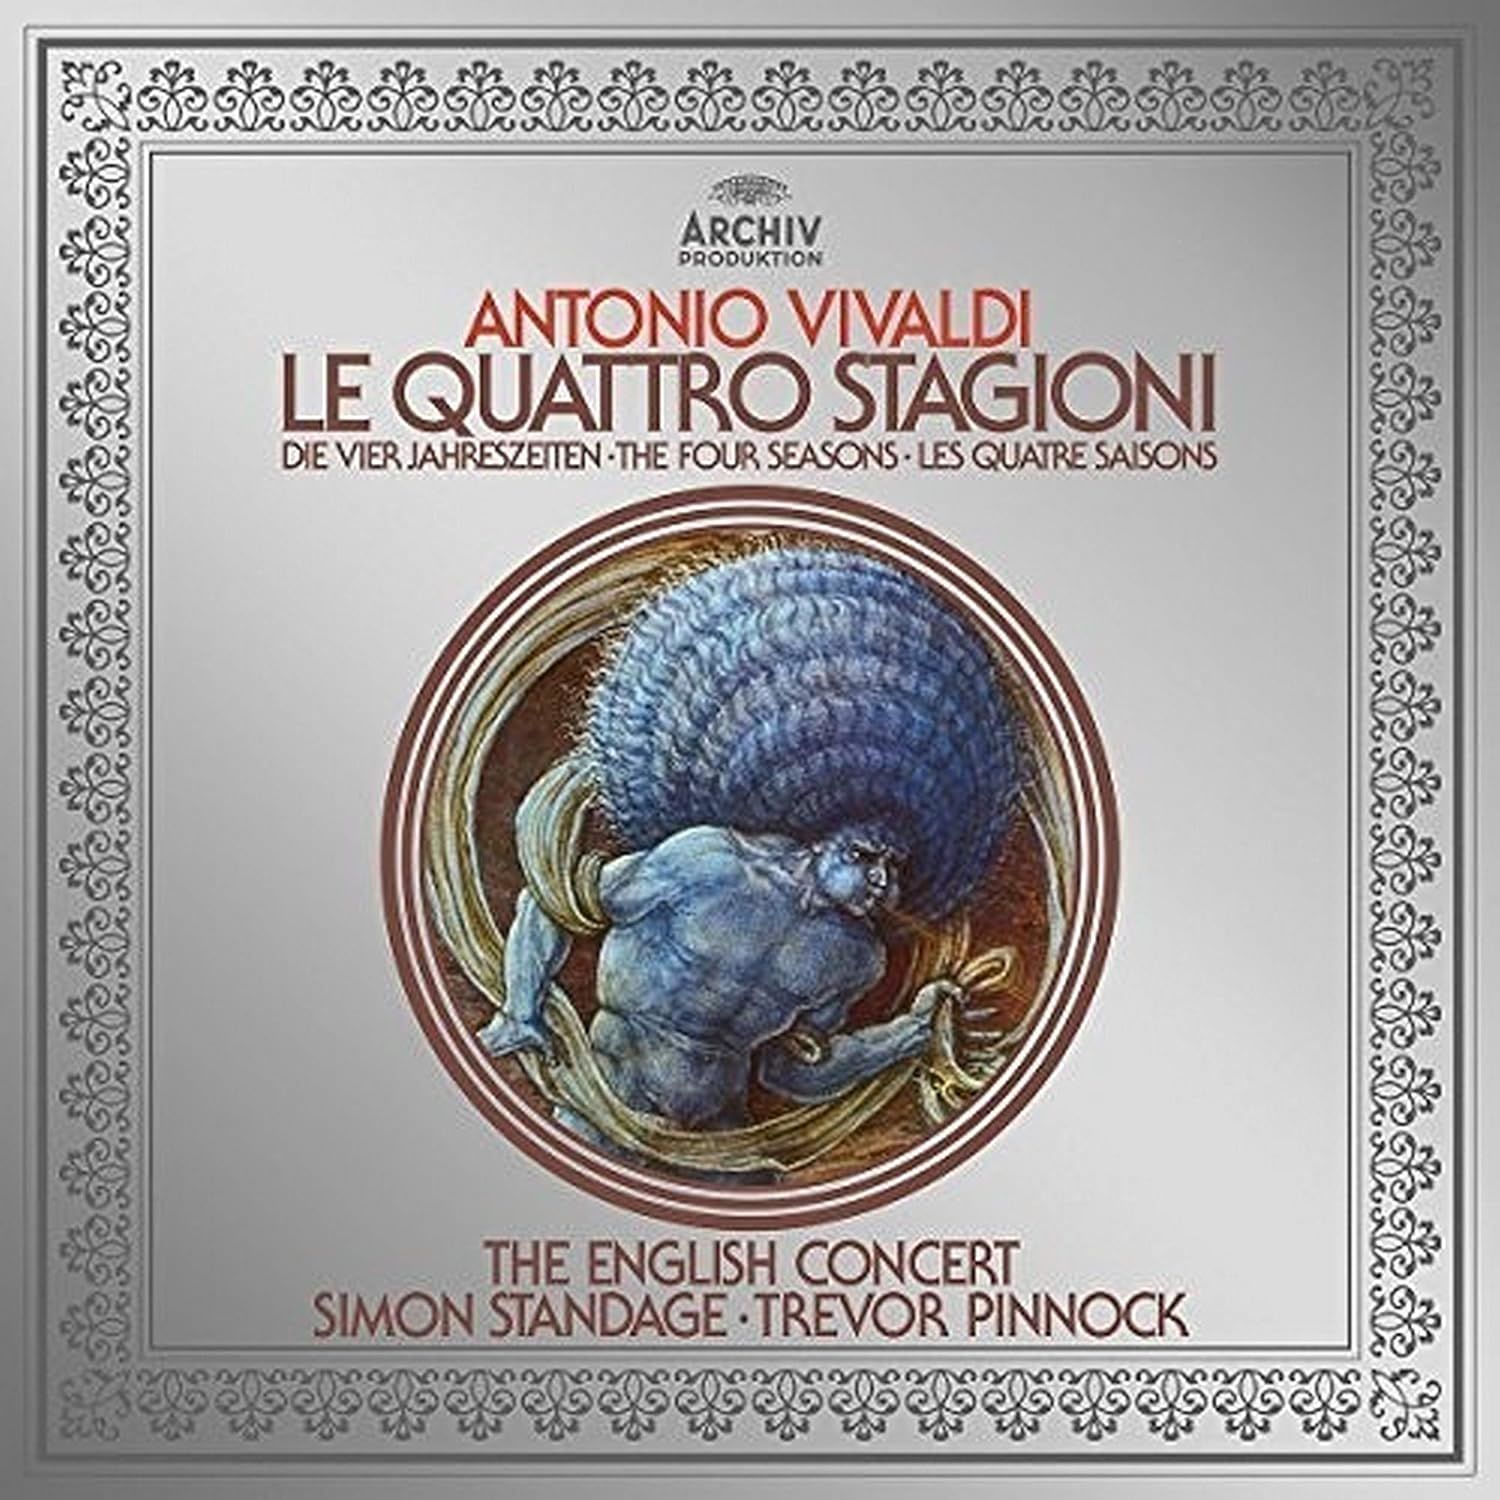 VIVALDI - LE QUATTRO STAGIONI /THE FOUR SEASON SIMON STANDAGE / TREVOR PINNOCK (1982) - LP 180GR 2018 EDITION SIFIR PLAK